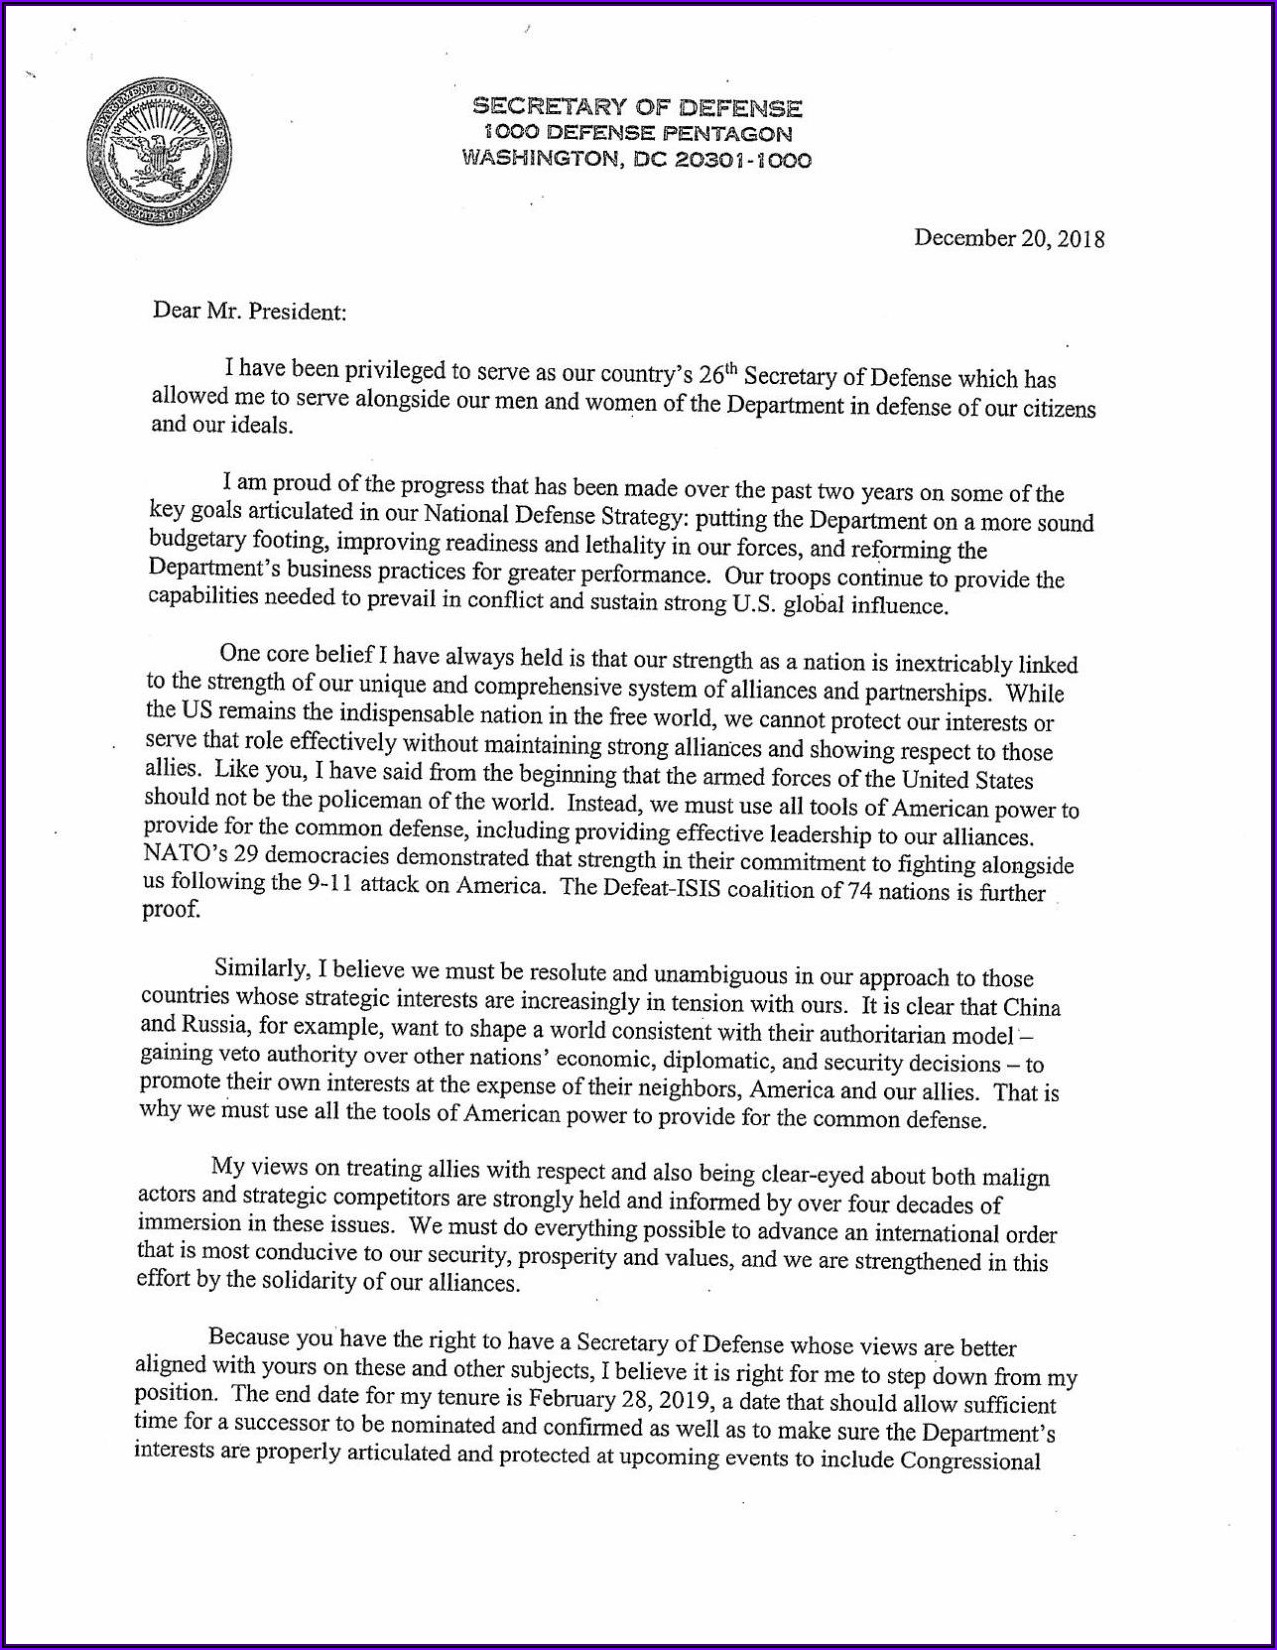 Jim Mattis Resignation Letter Pdf